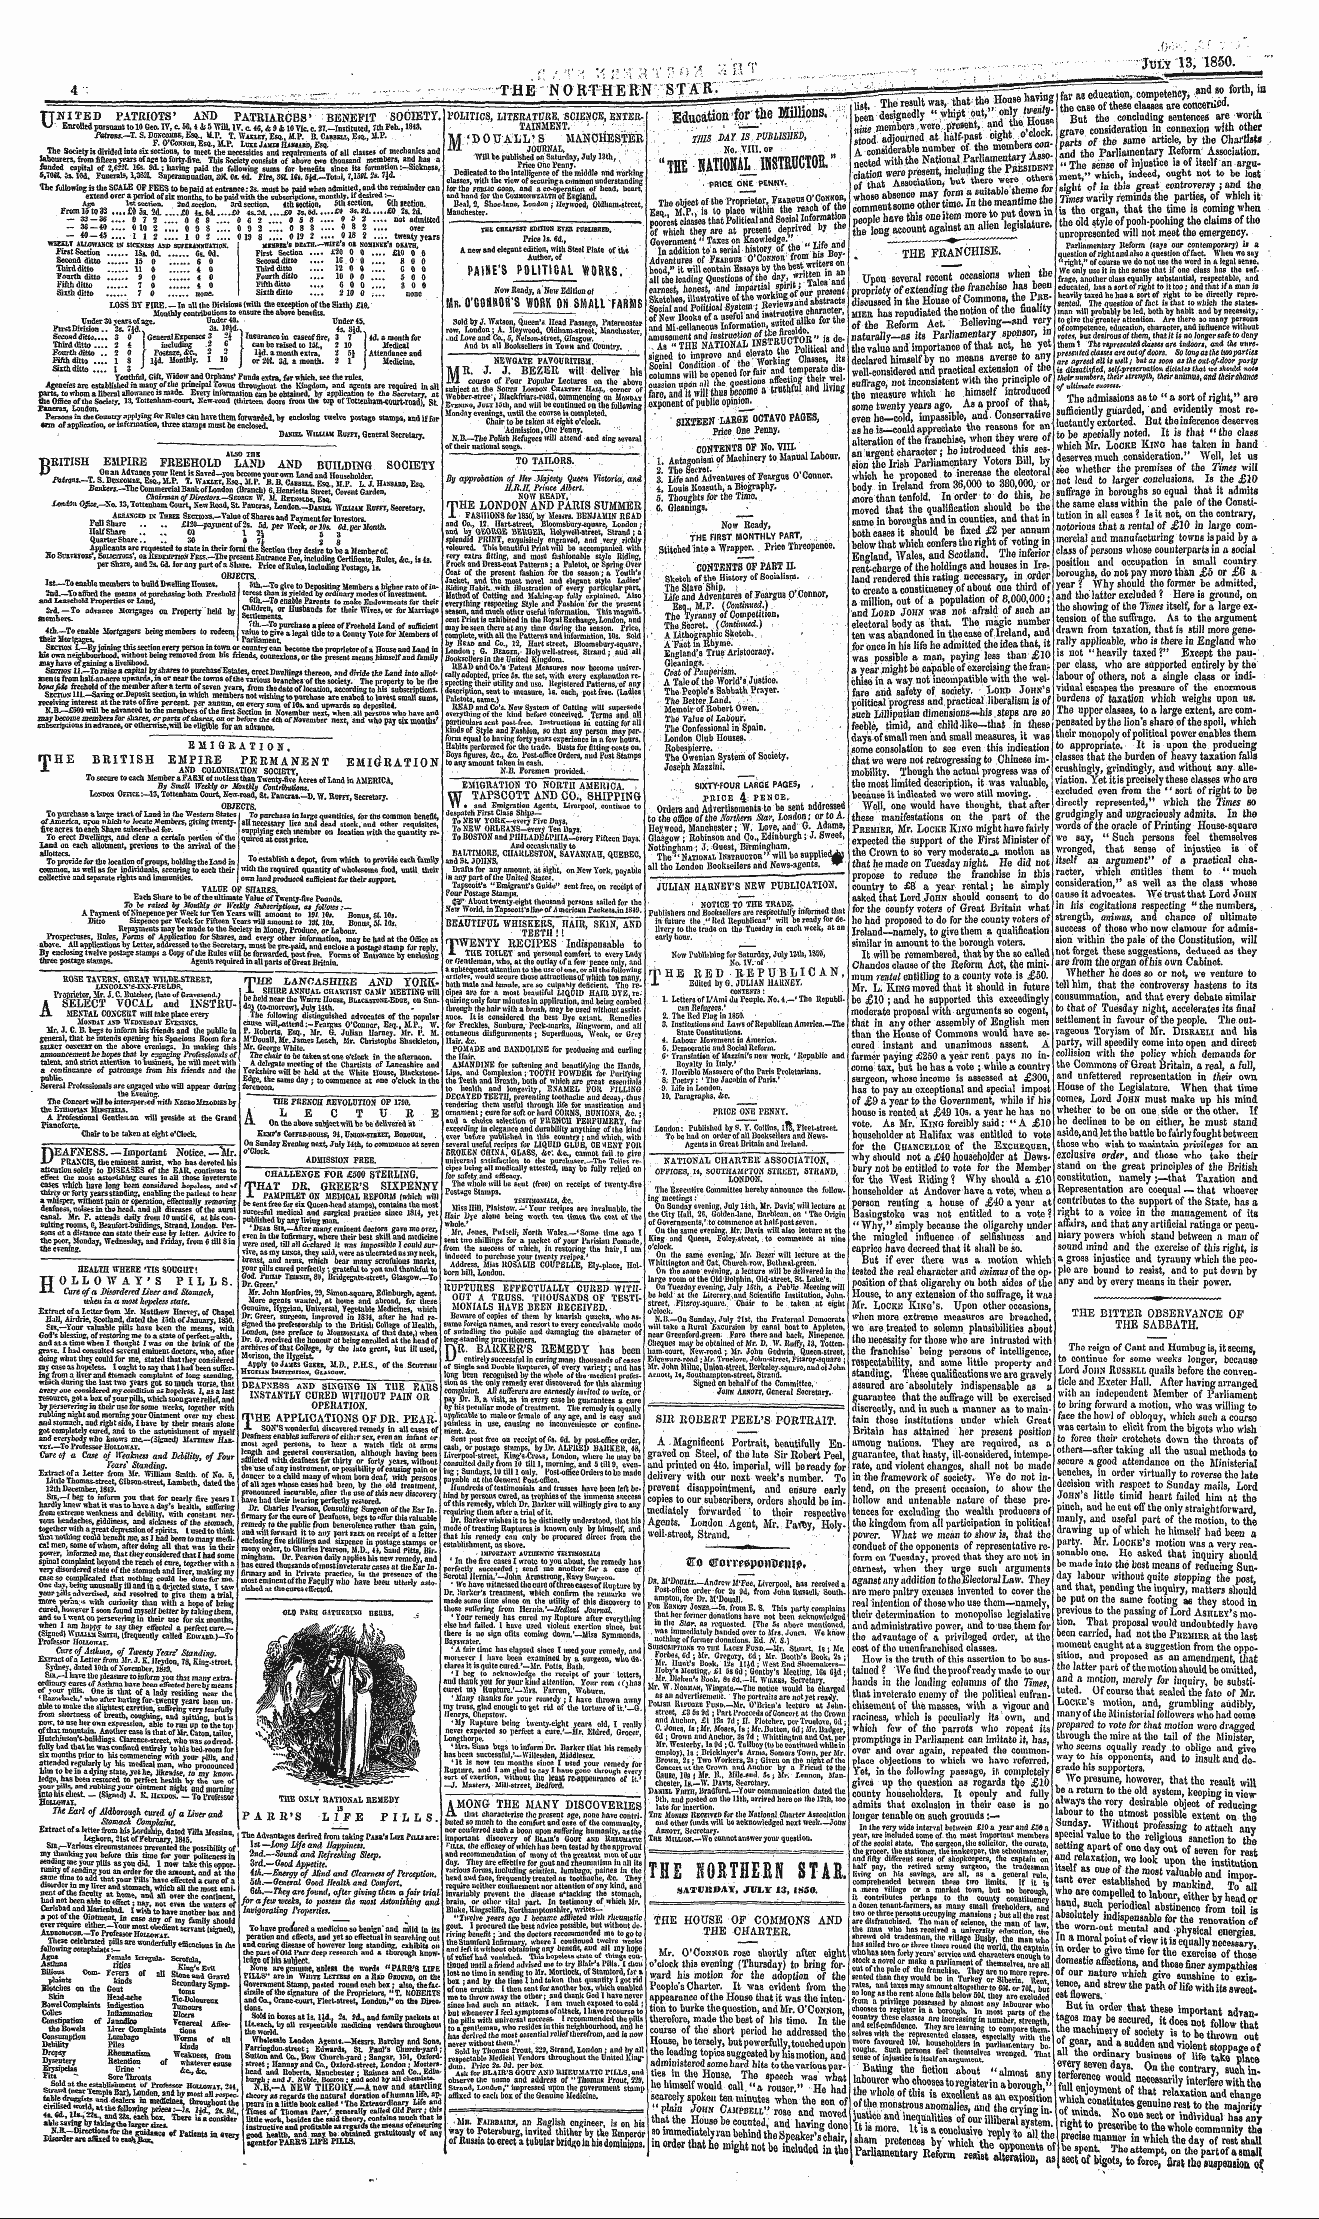 Northern Star (1837-1852): jS F Y, 3rd edition - Ad00407